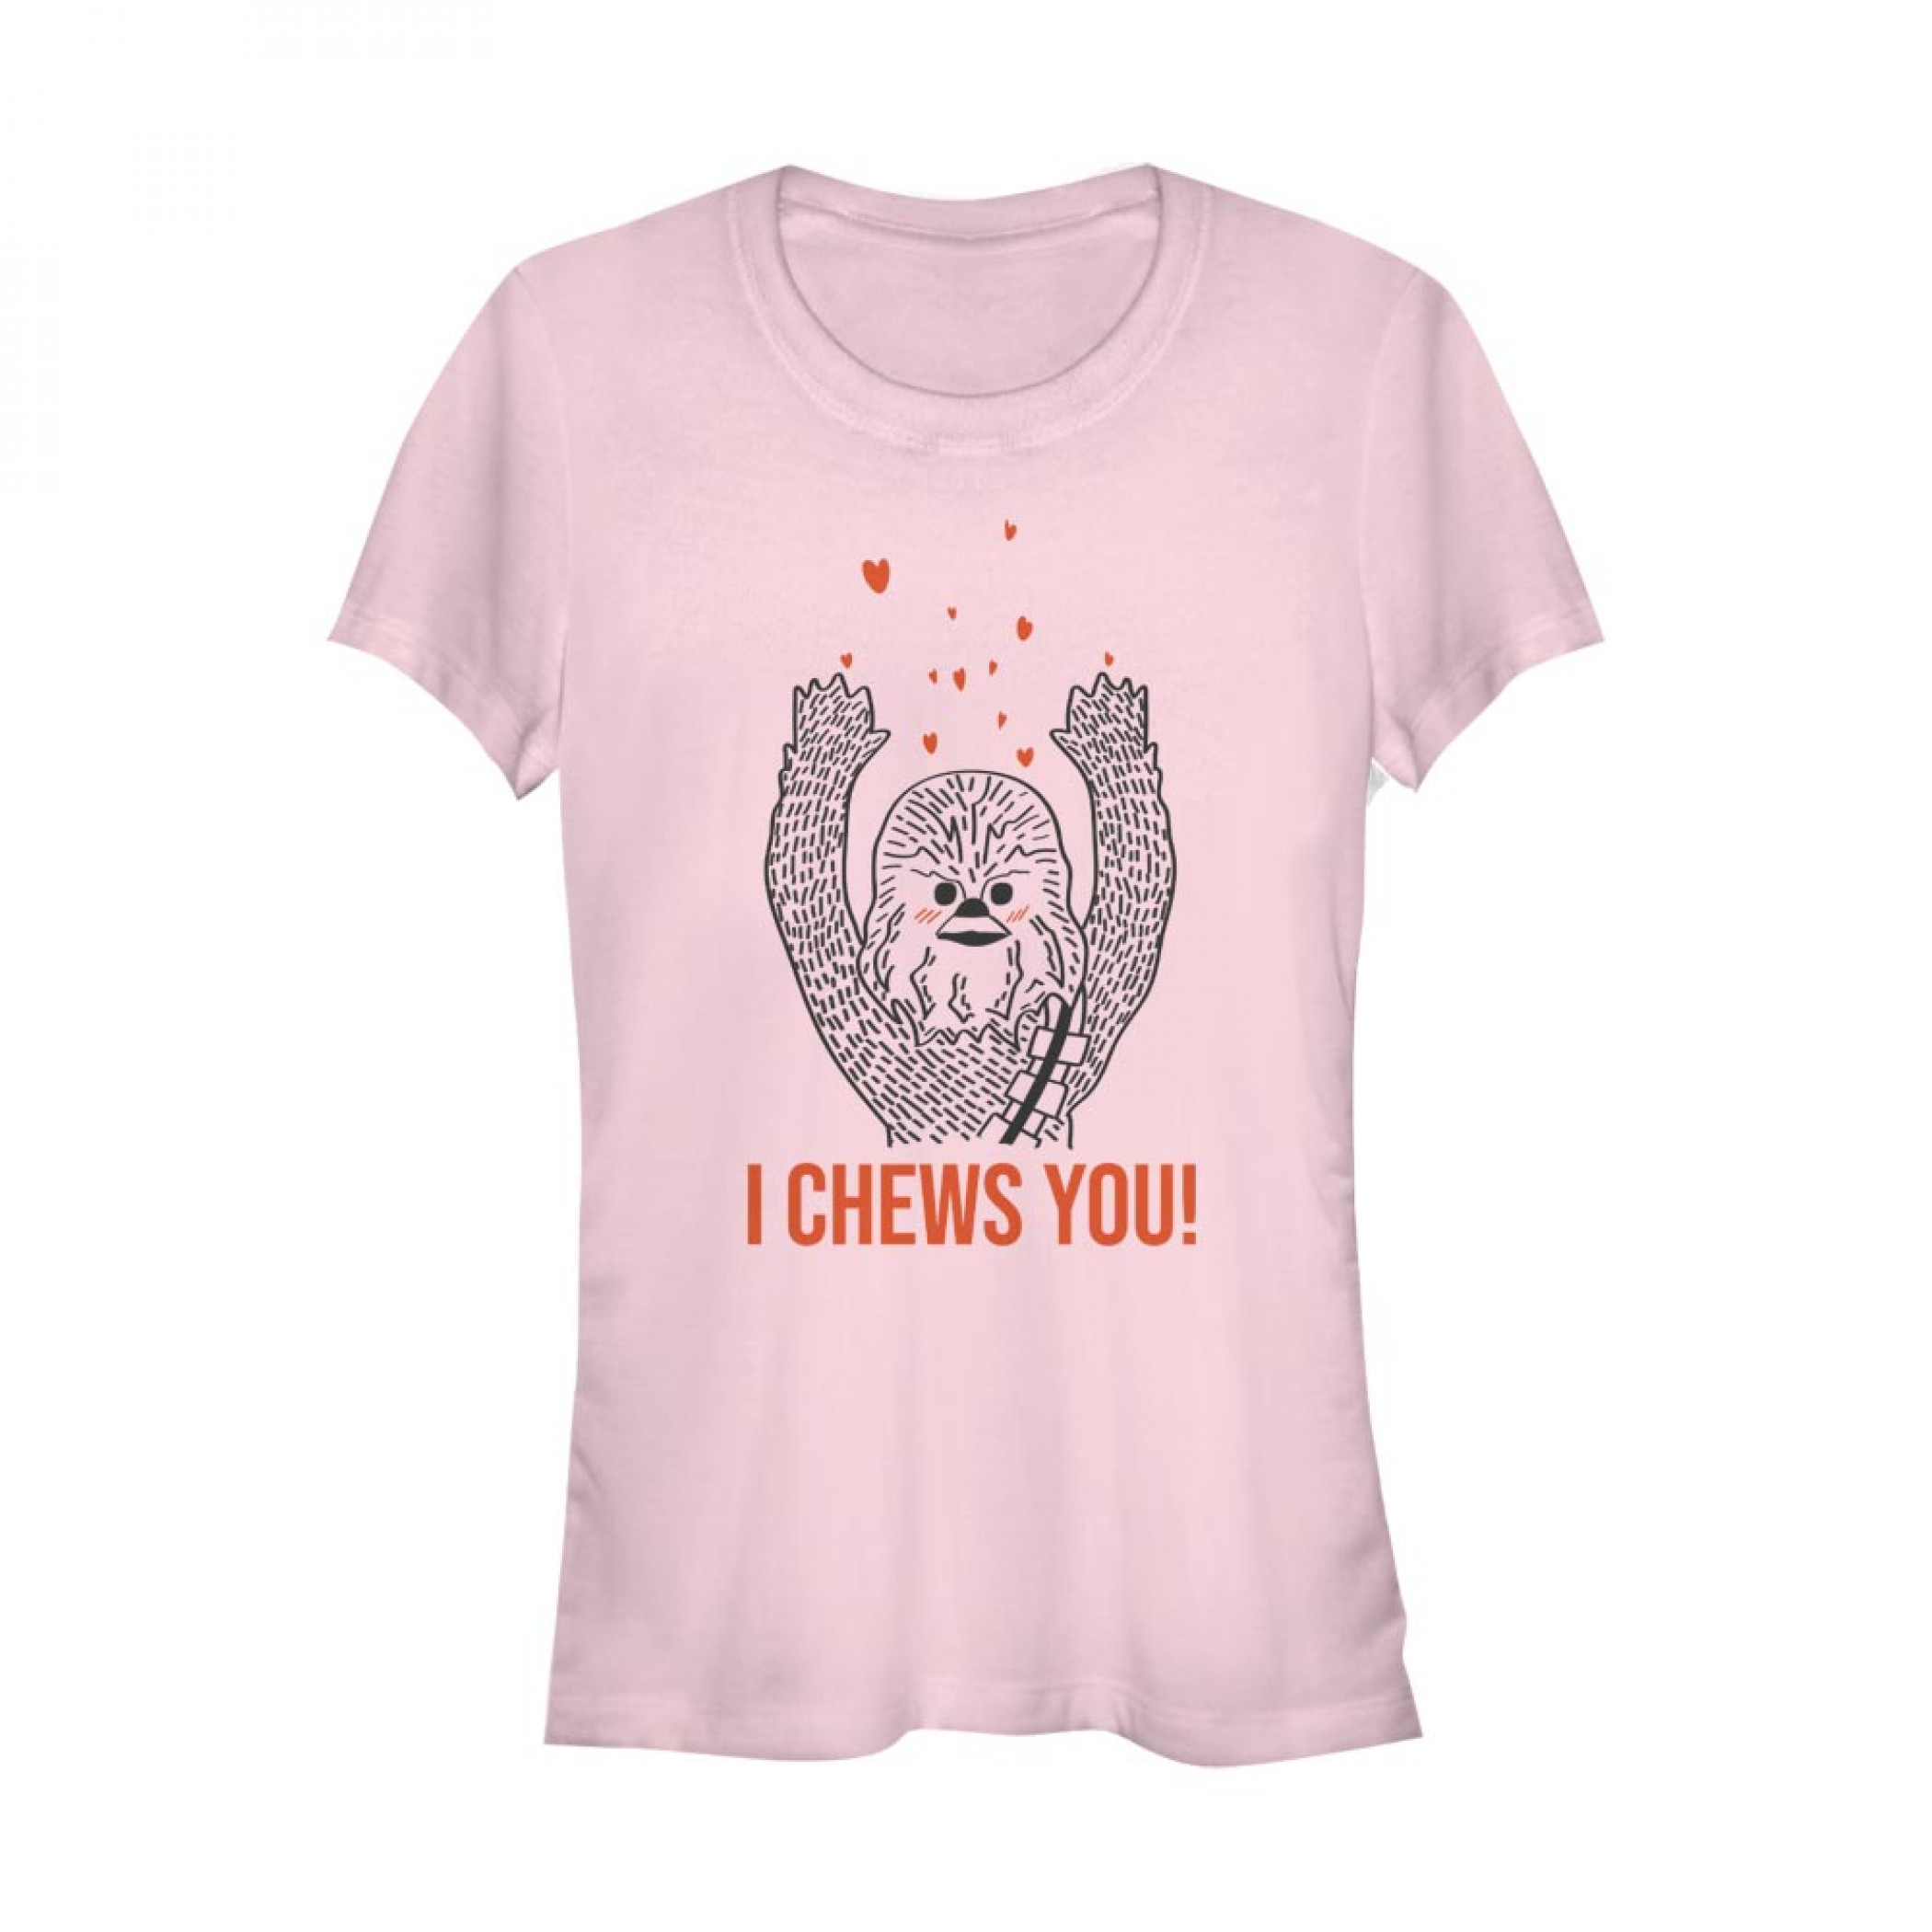 Star Wars I Chews You Women's Pink T-Shirt